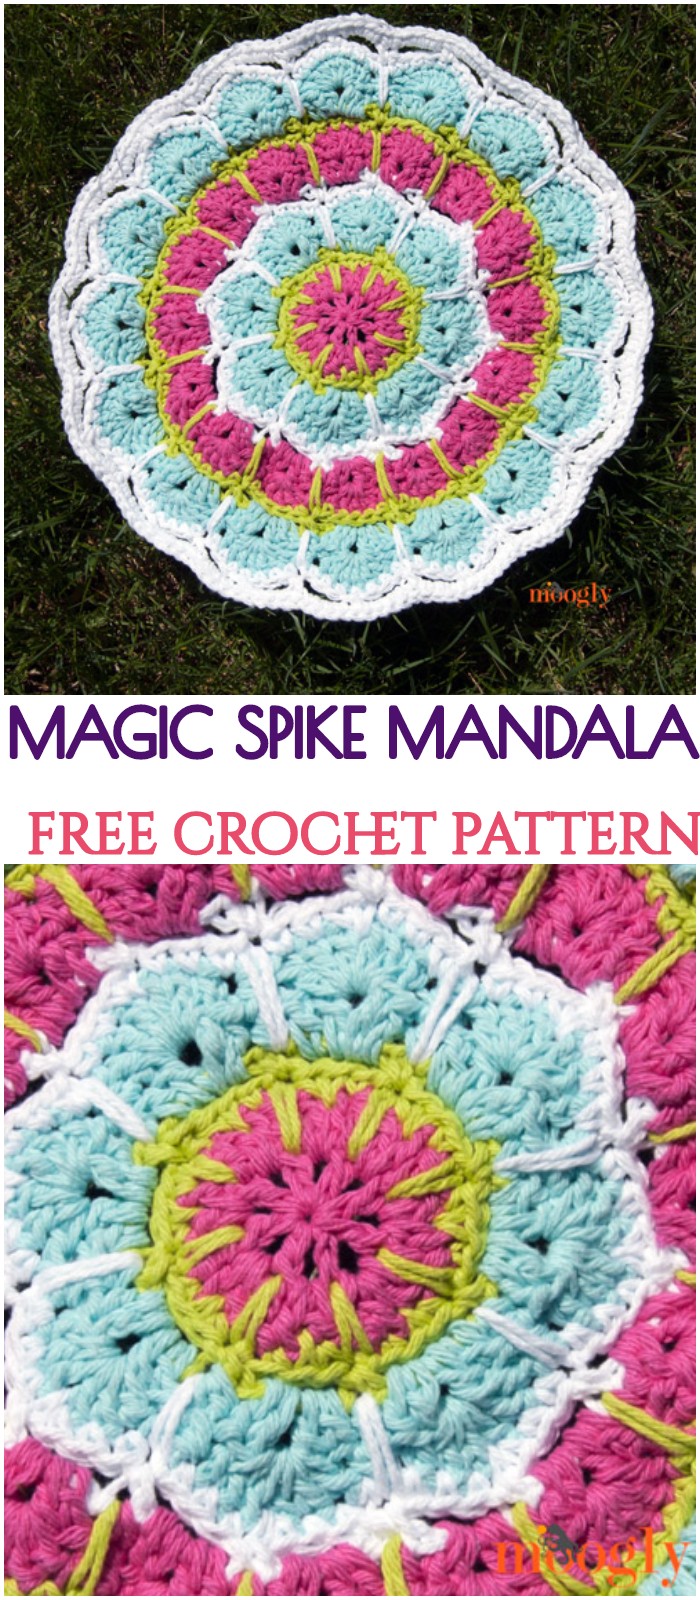 Crochet Magic Spike Mandala